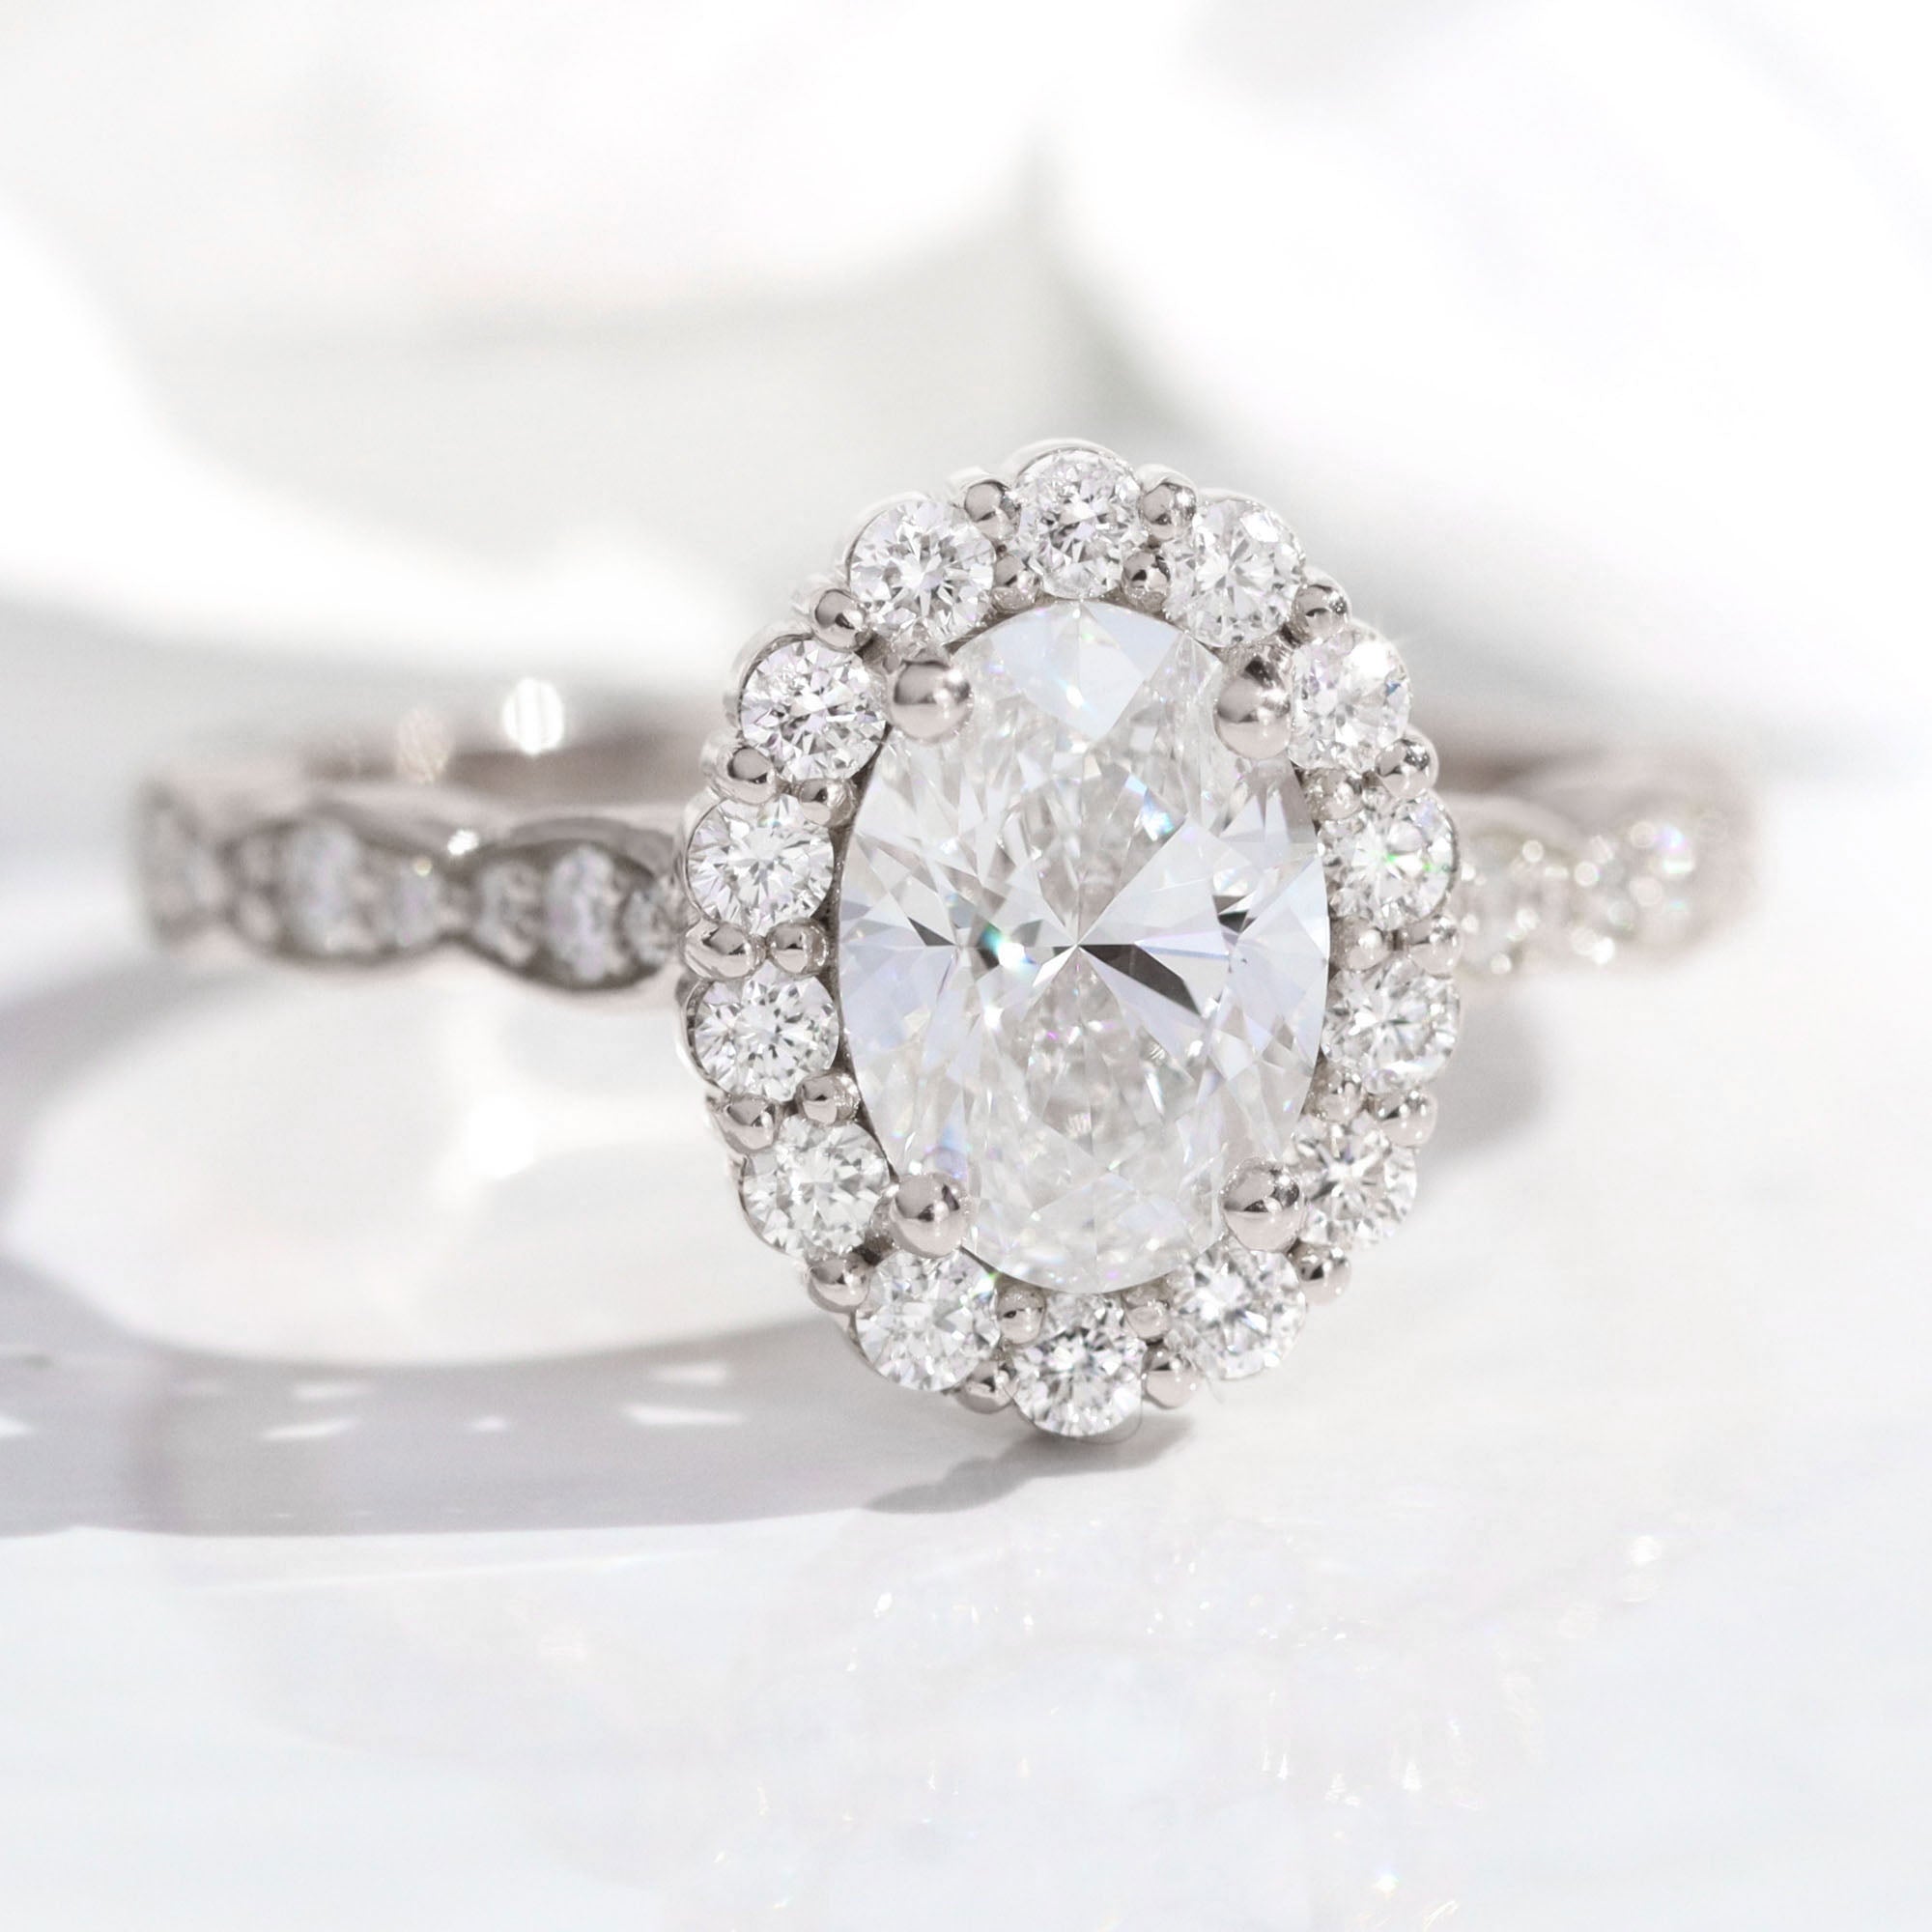 lab diamond ring white gold halo diamond engagement ring La More Design Jewelry